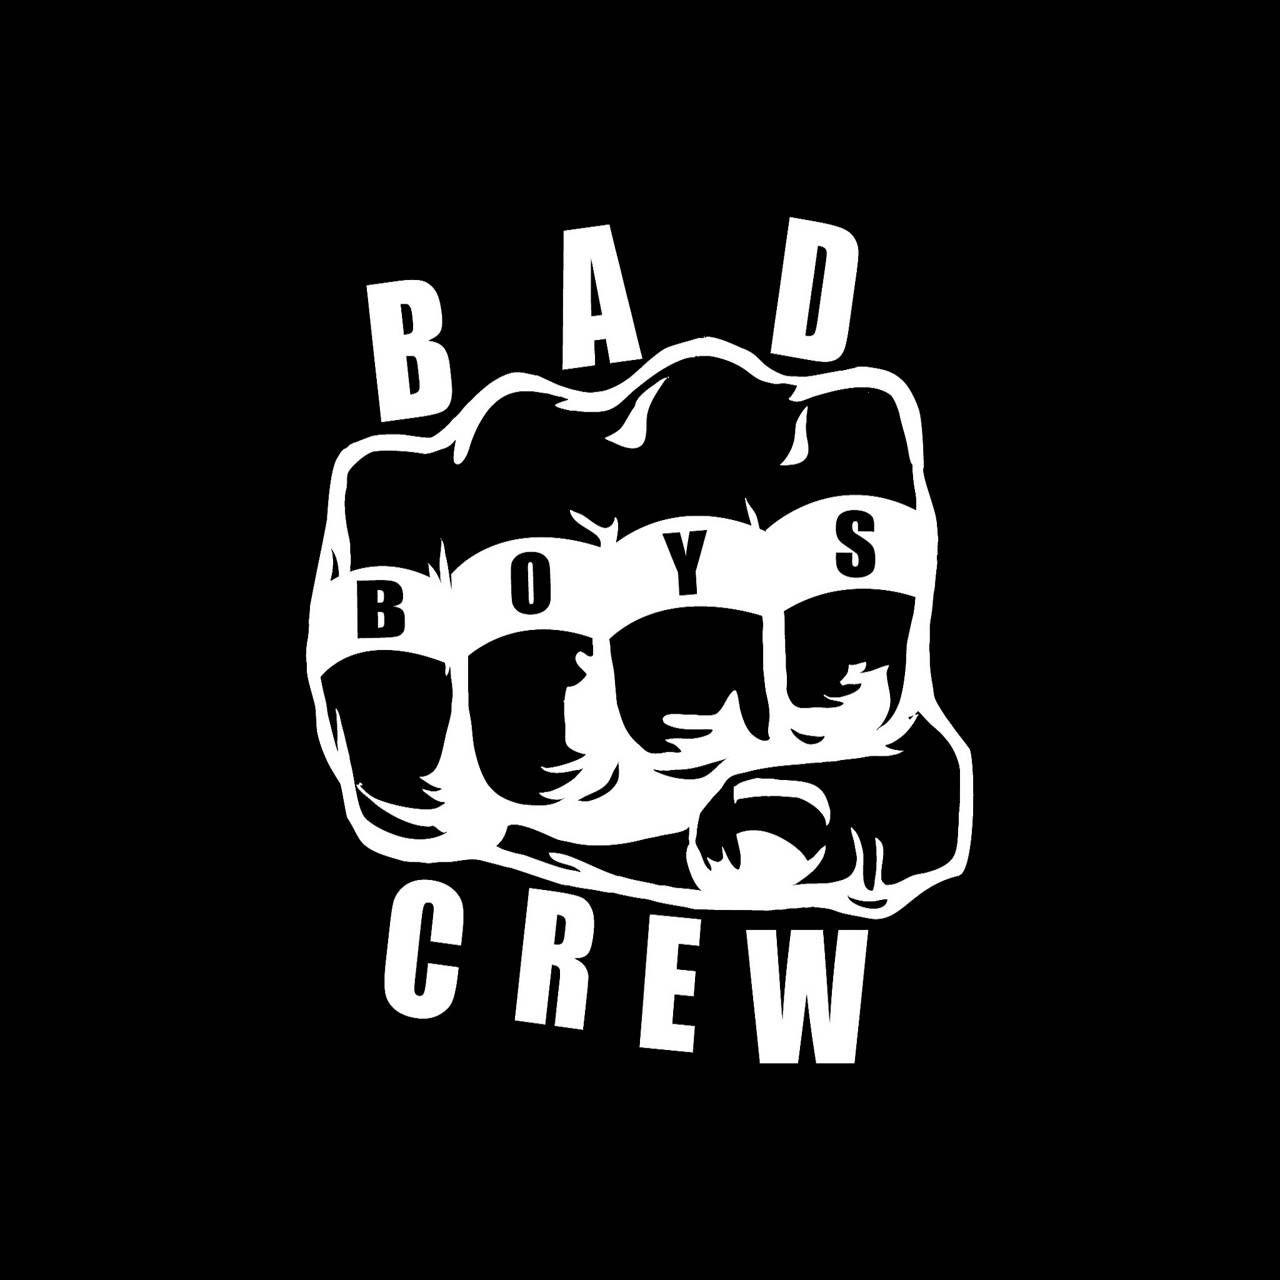 Bad Boy Logo Wallpapers - Top Free Bad Boy Logo Backgrounds ...